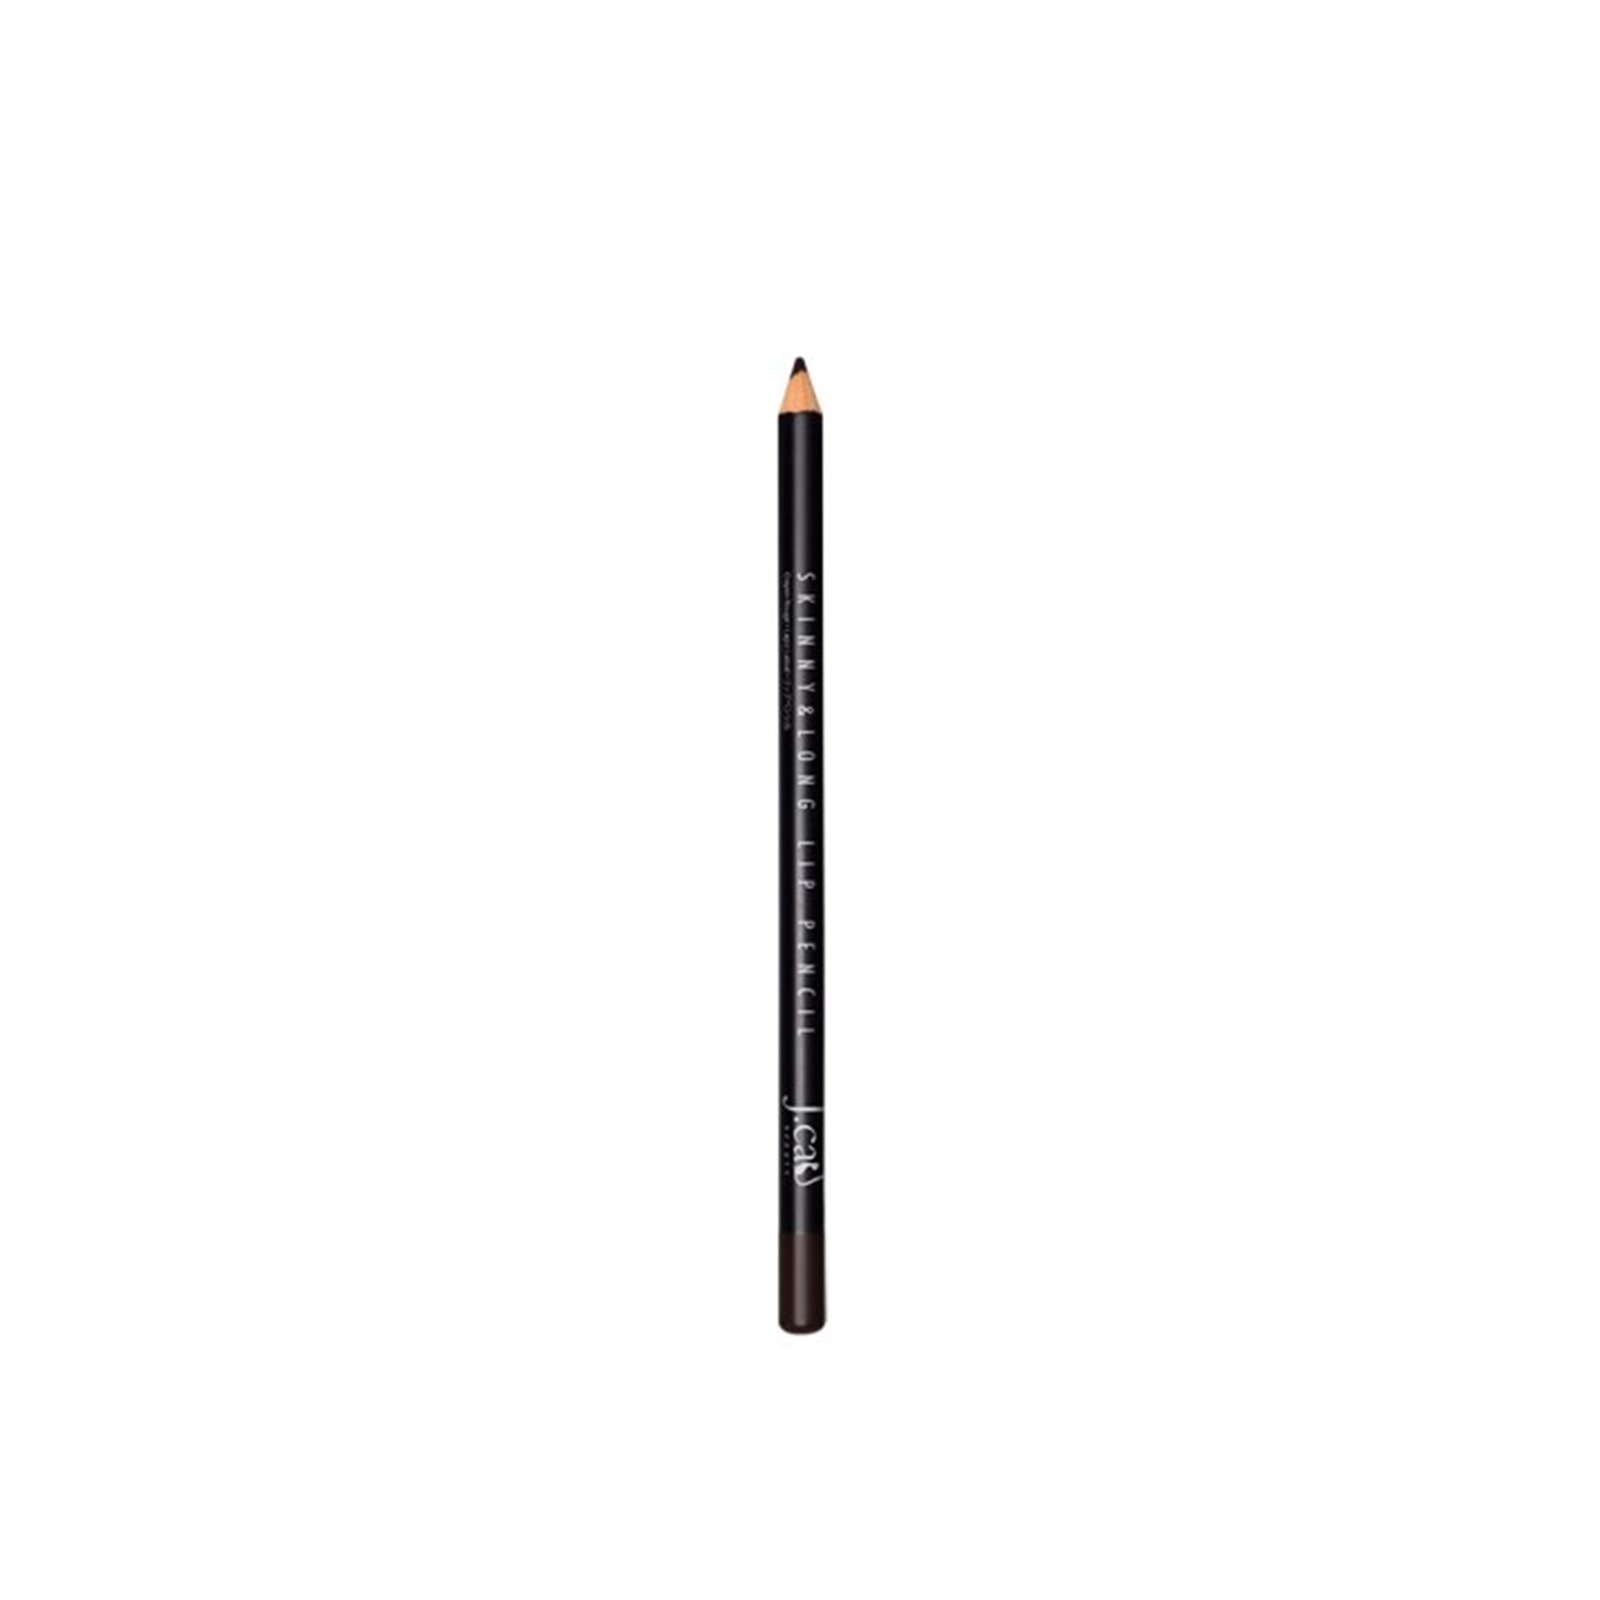 J.Cat Skinny & Long Lip Pencil 105 Black 2g (0.08 oz)